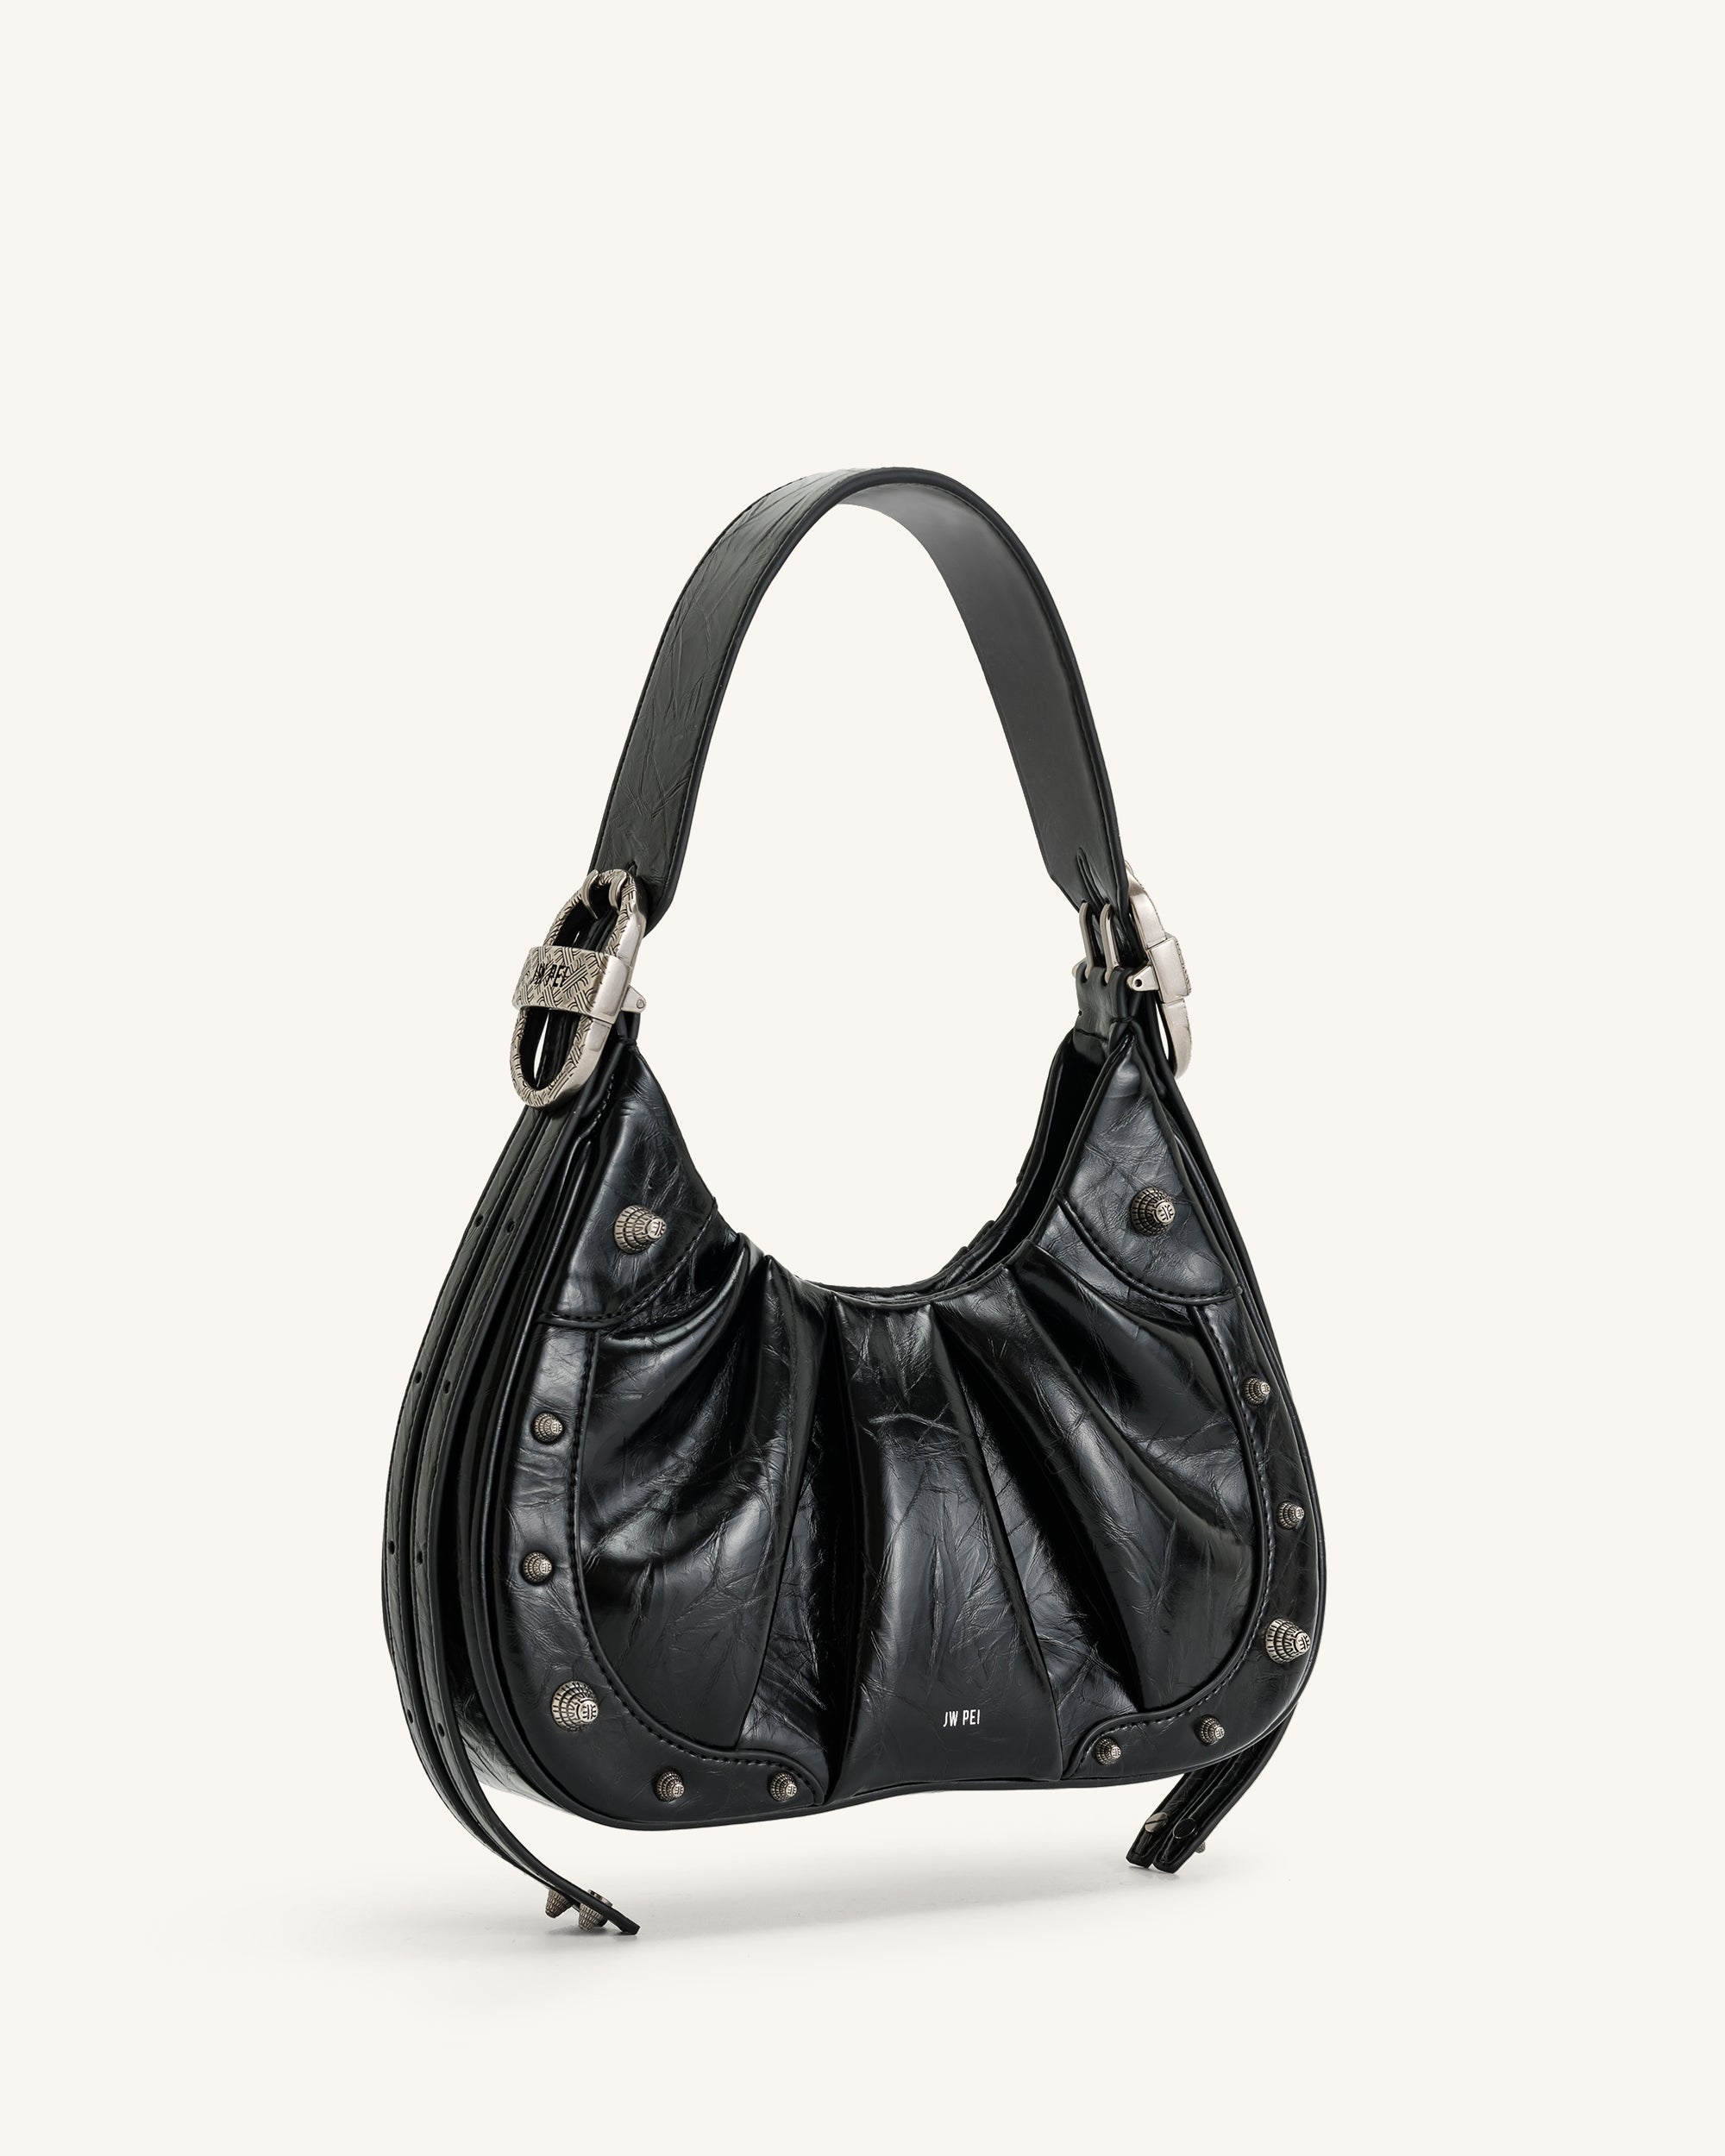 NWT Black JW PEI Cora Top Women's Crossbody Bag for Sale in